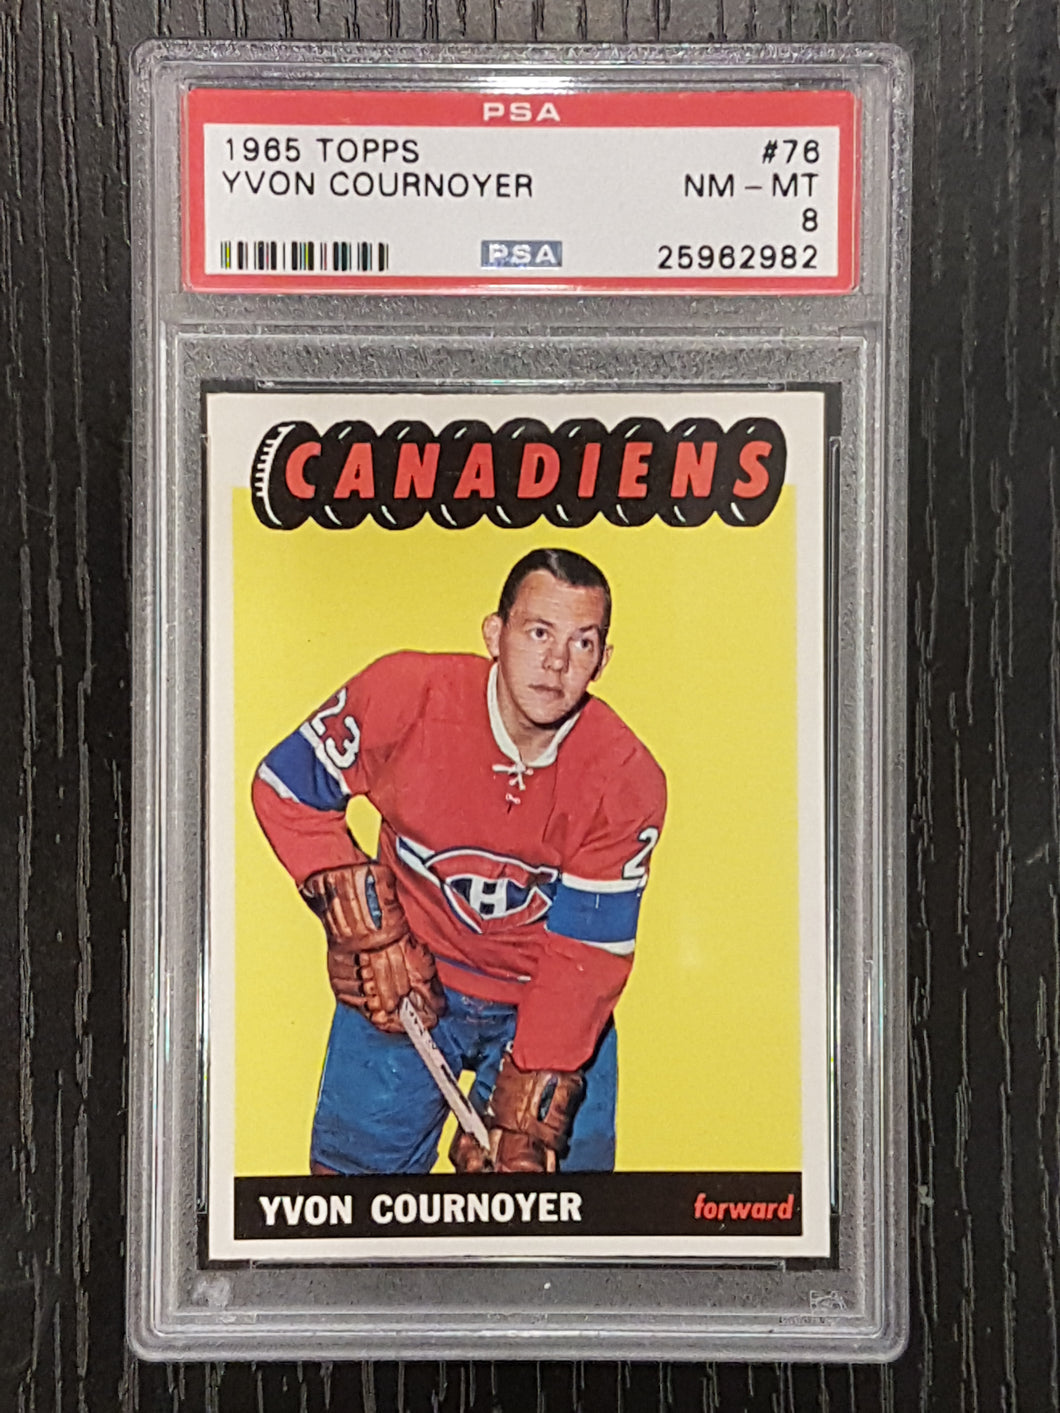 1965 Topps Hockey Card Set (PSA, SGC, KSA) Graded.